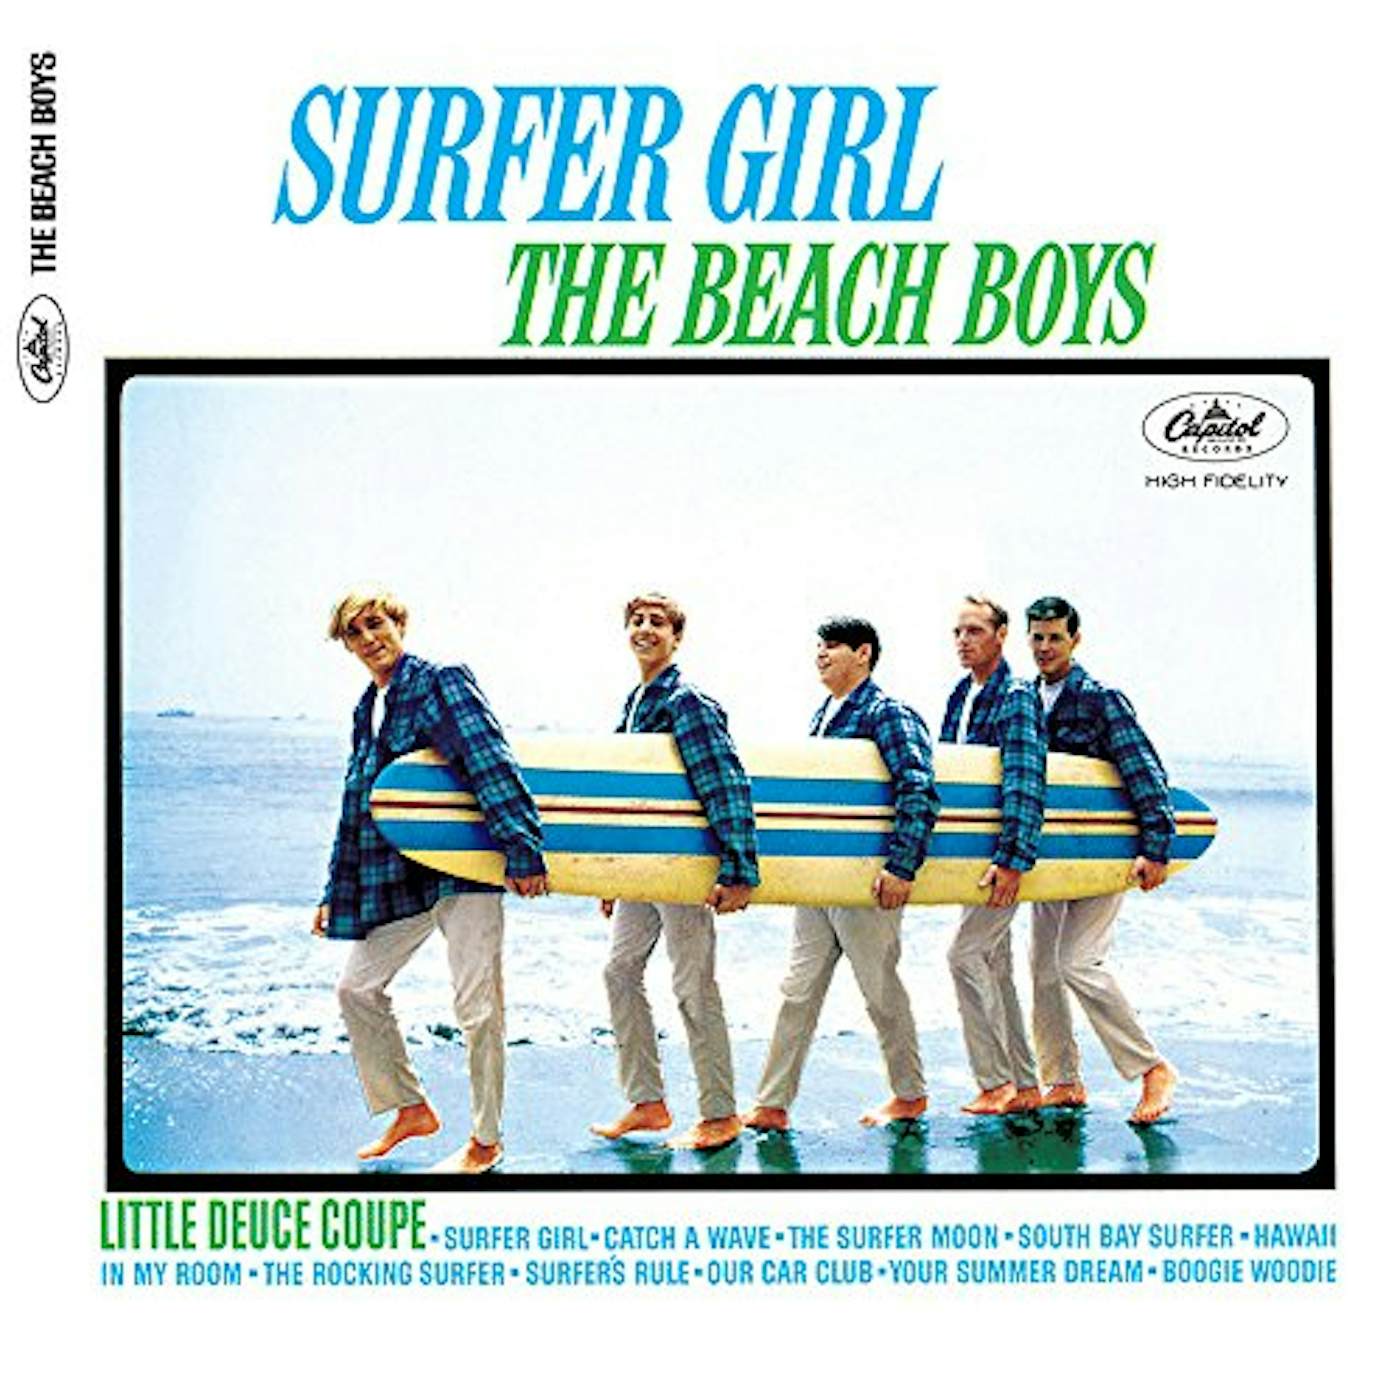 The Beach Boys Surfer Girl (75th Anniversary) Vinyl Record